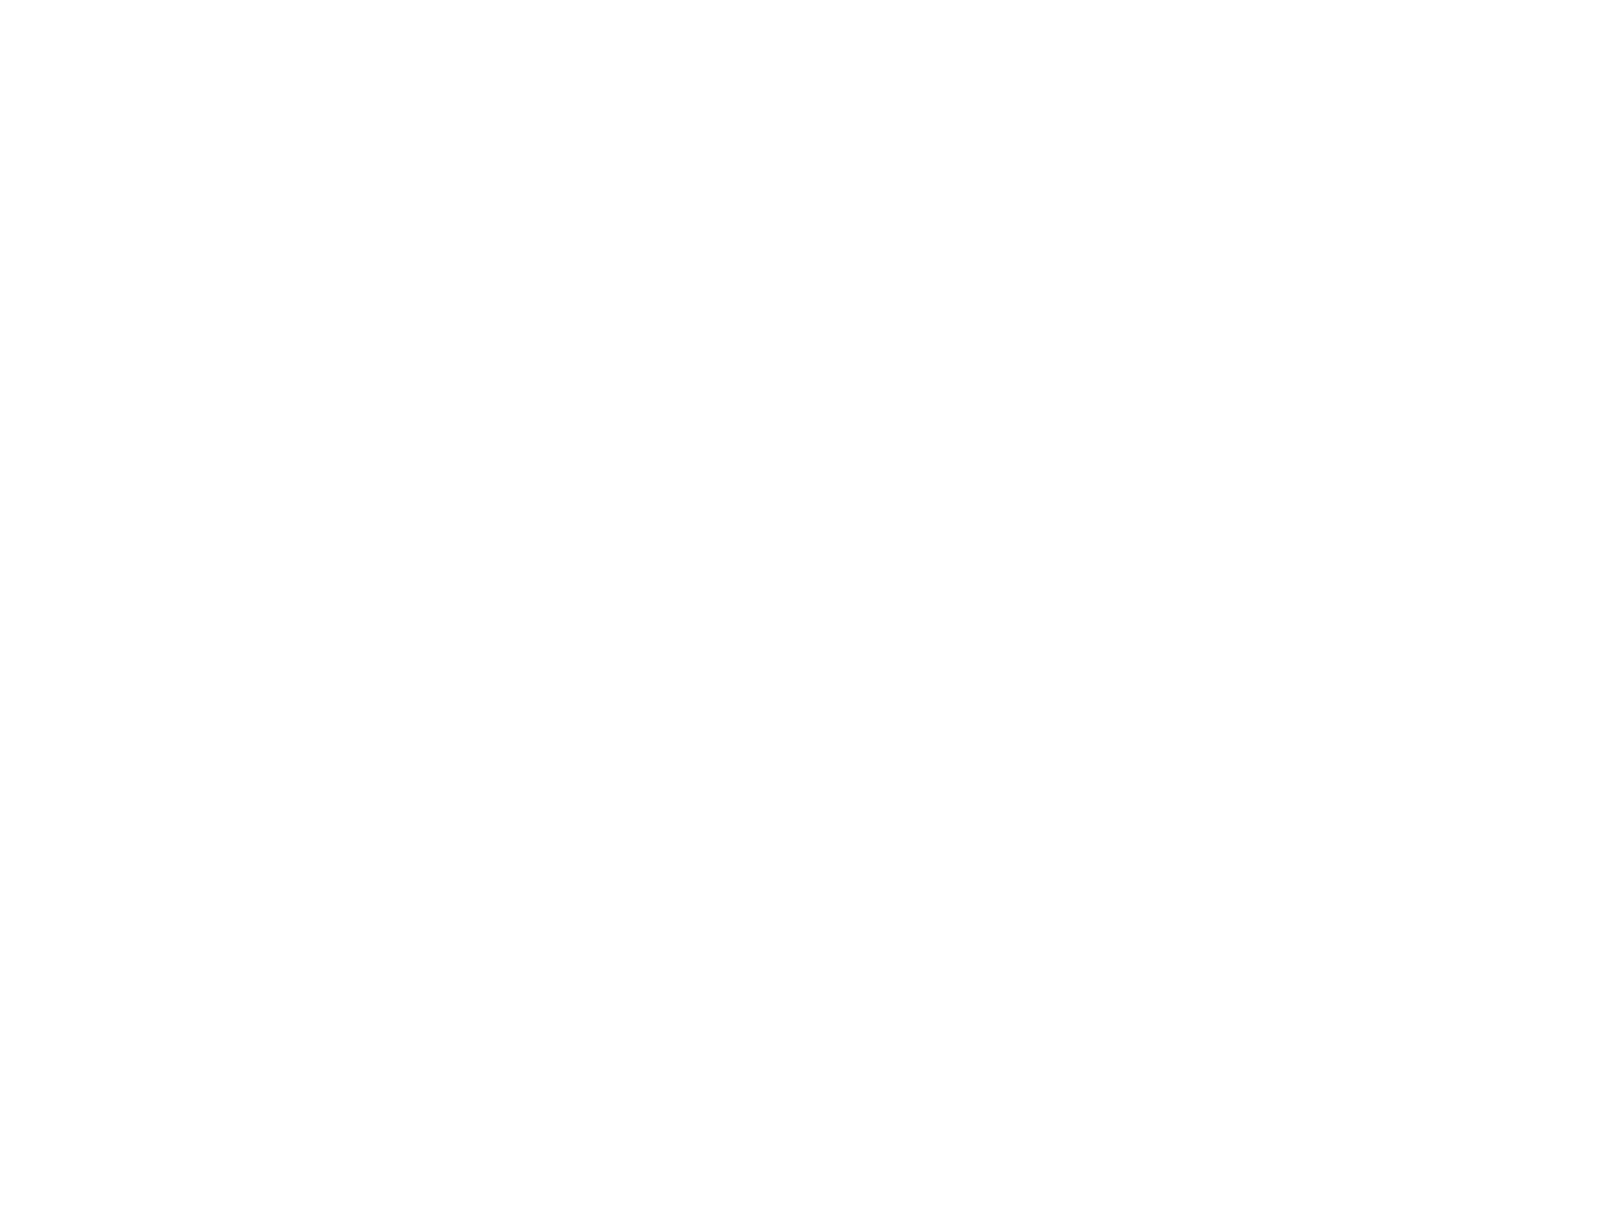 Actors Logo - Christ's Church of Oronogo. Actors. Preparing God's People To